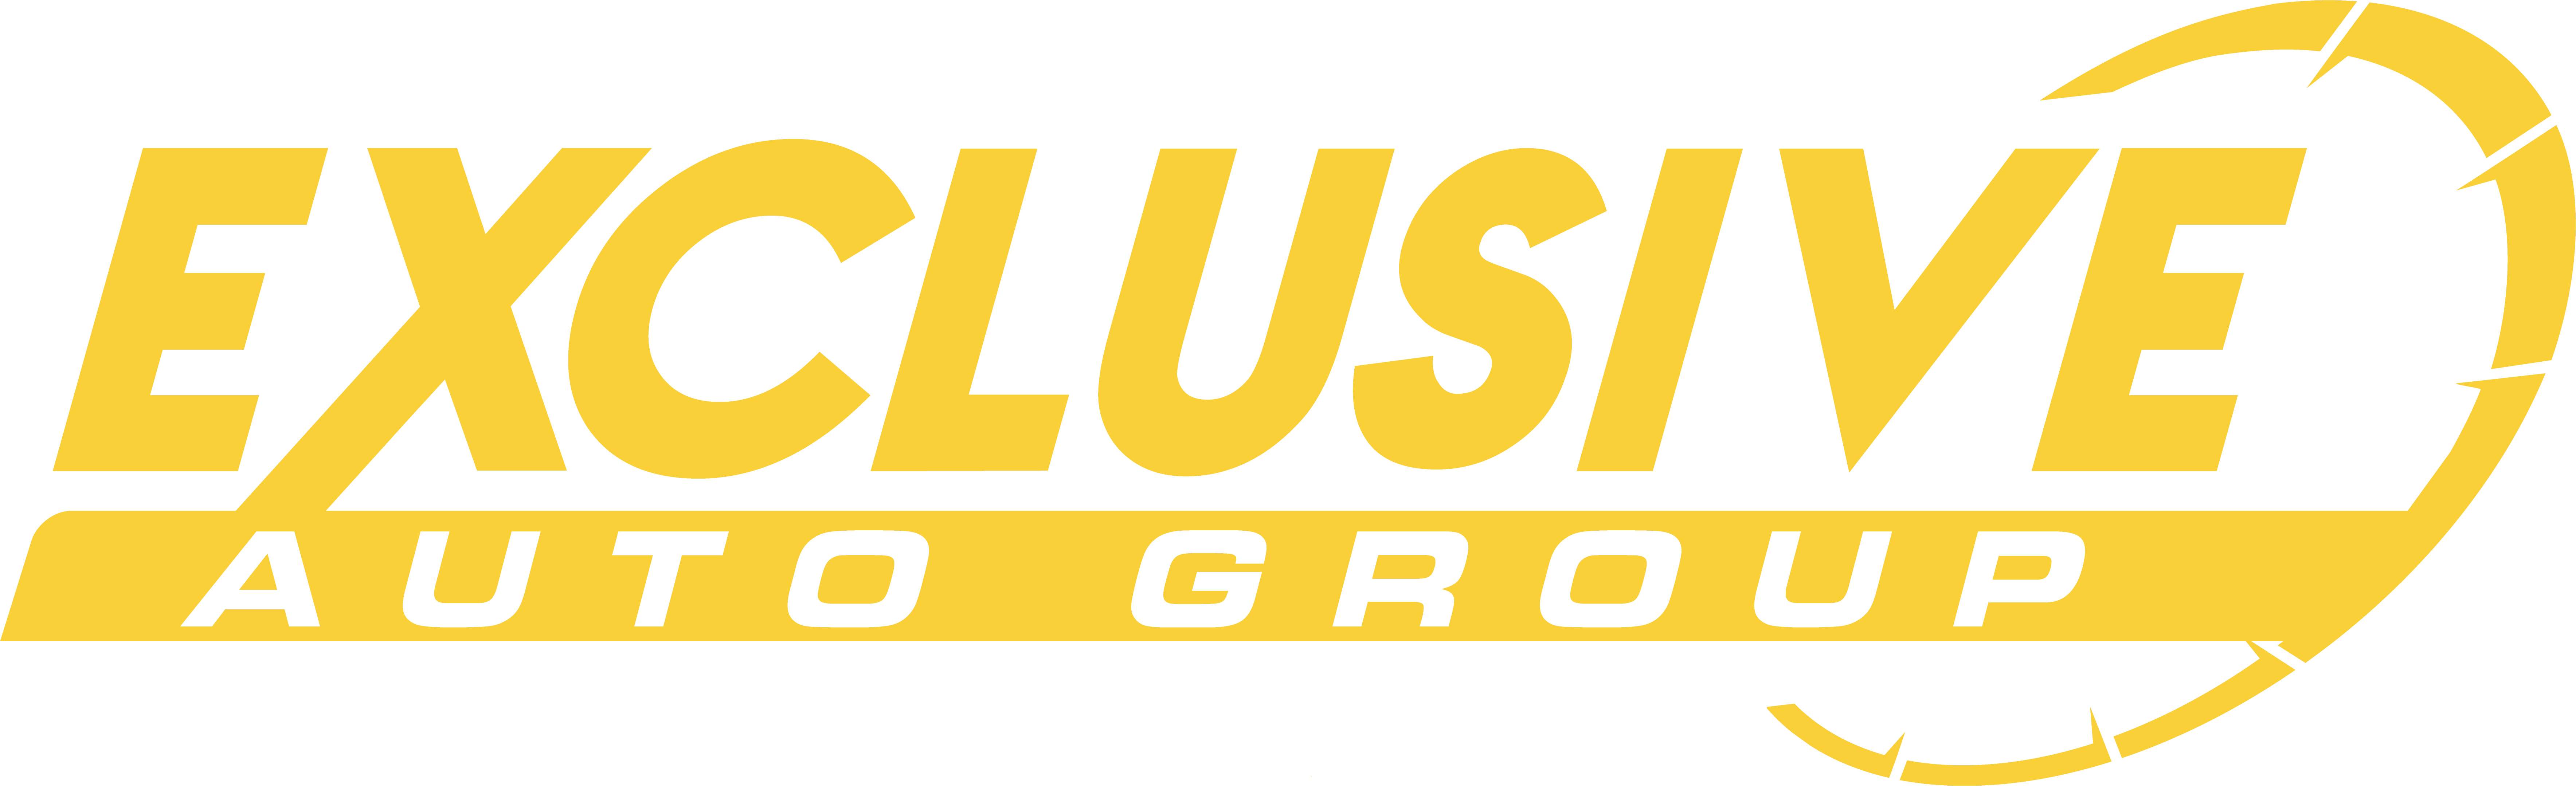 Exclusive Auto Group